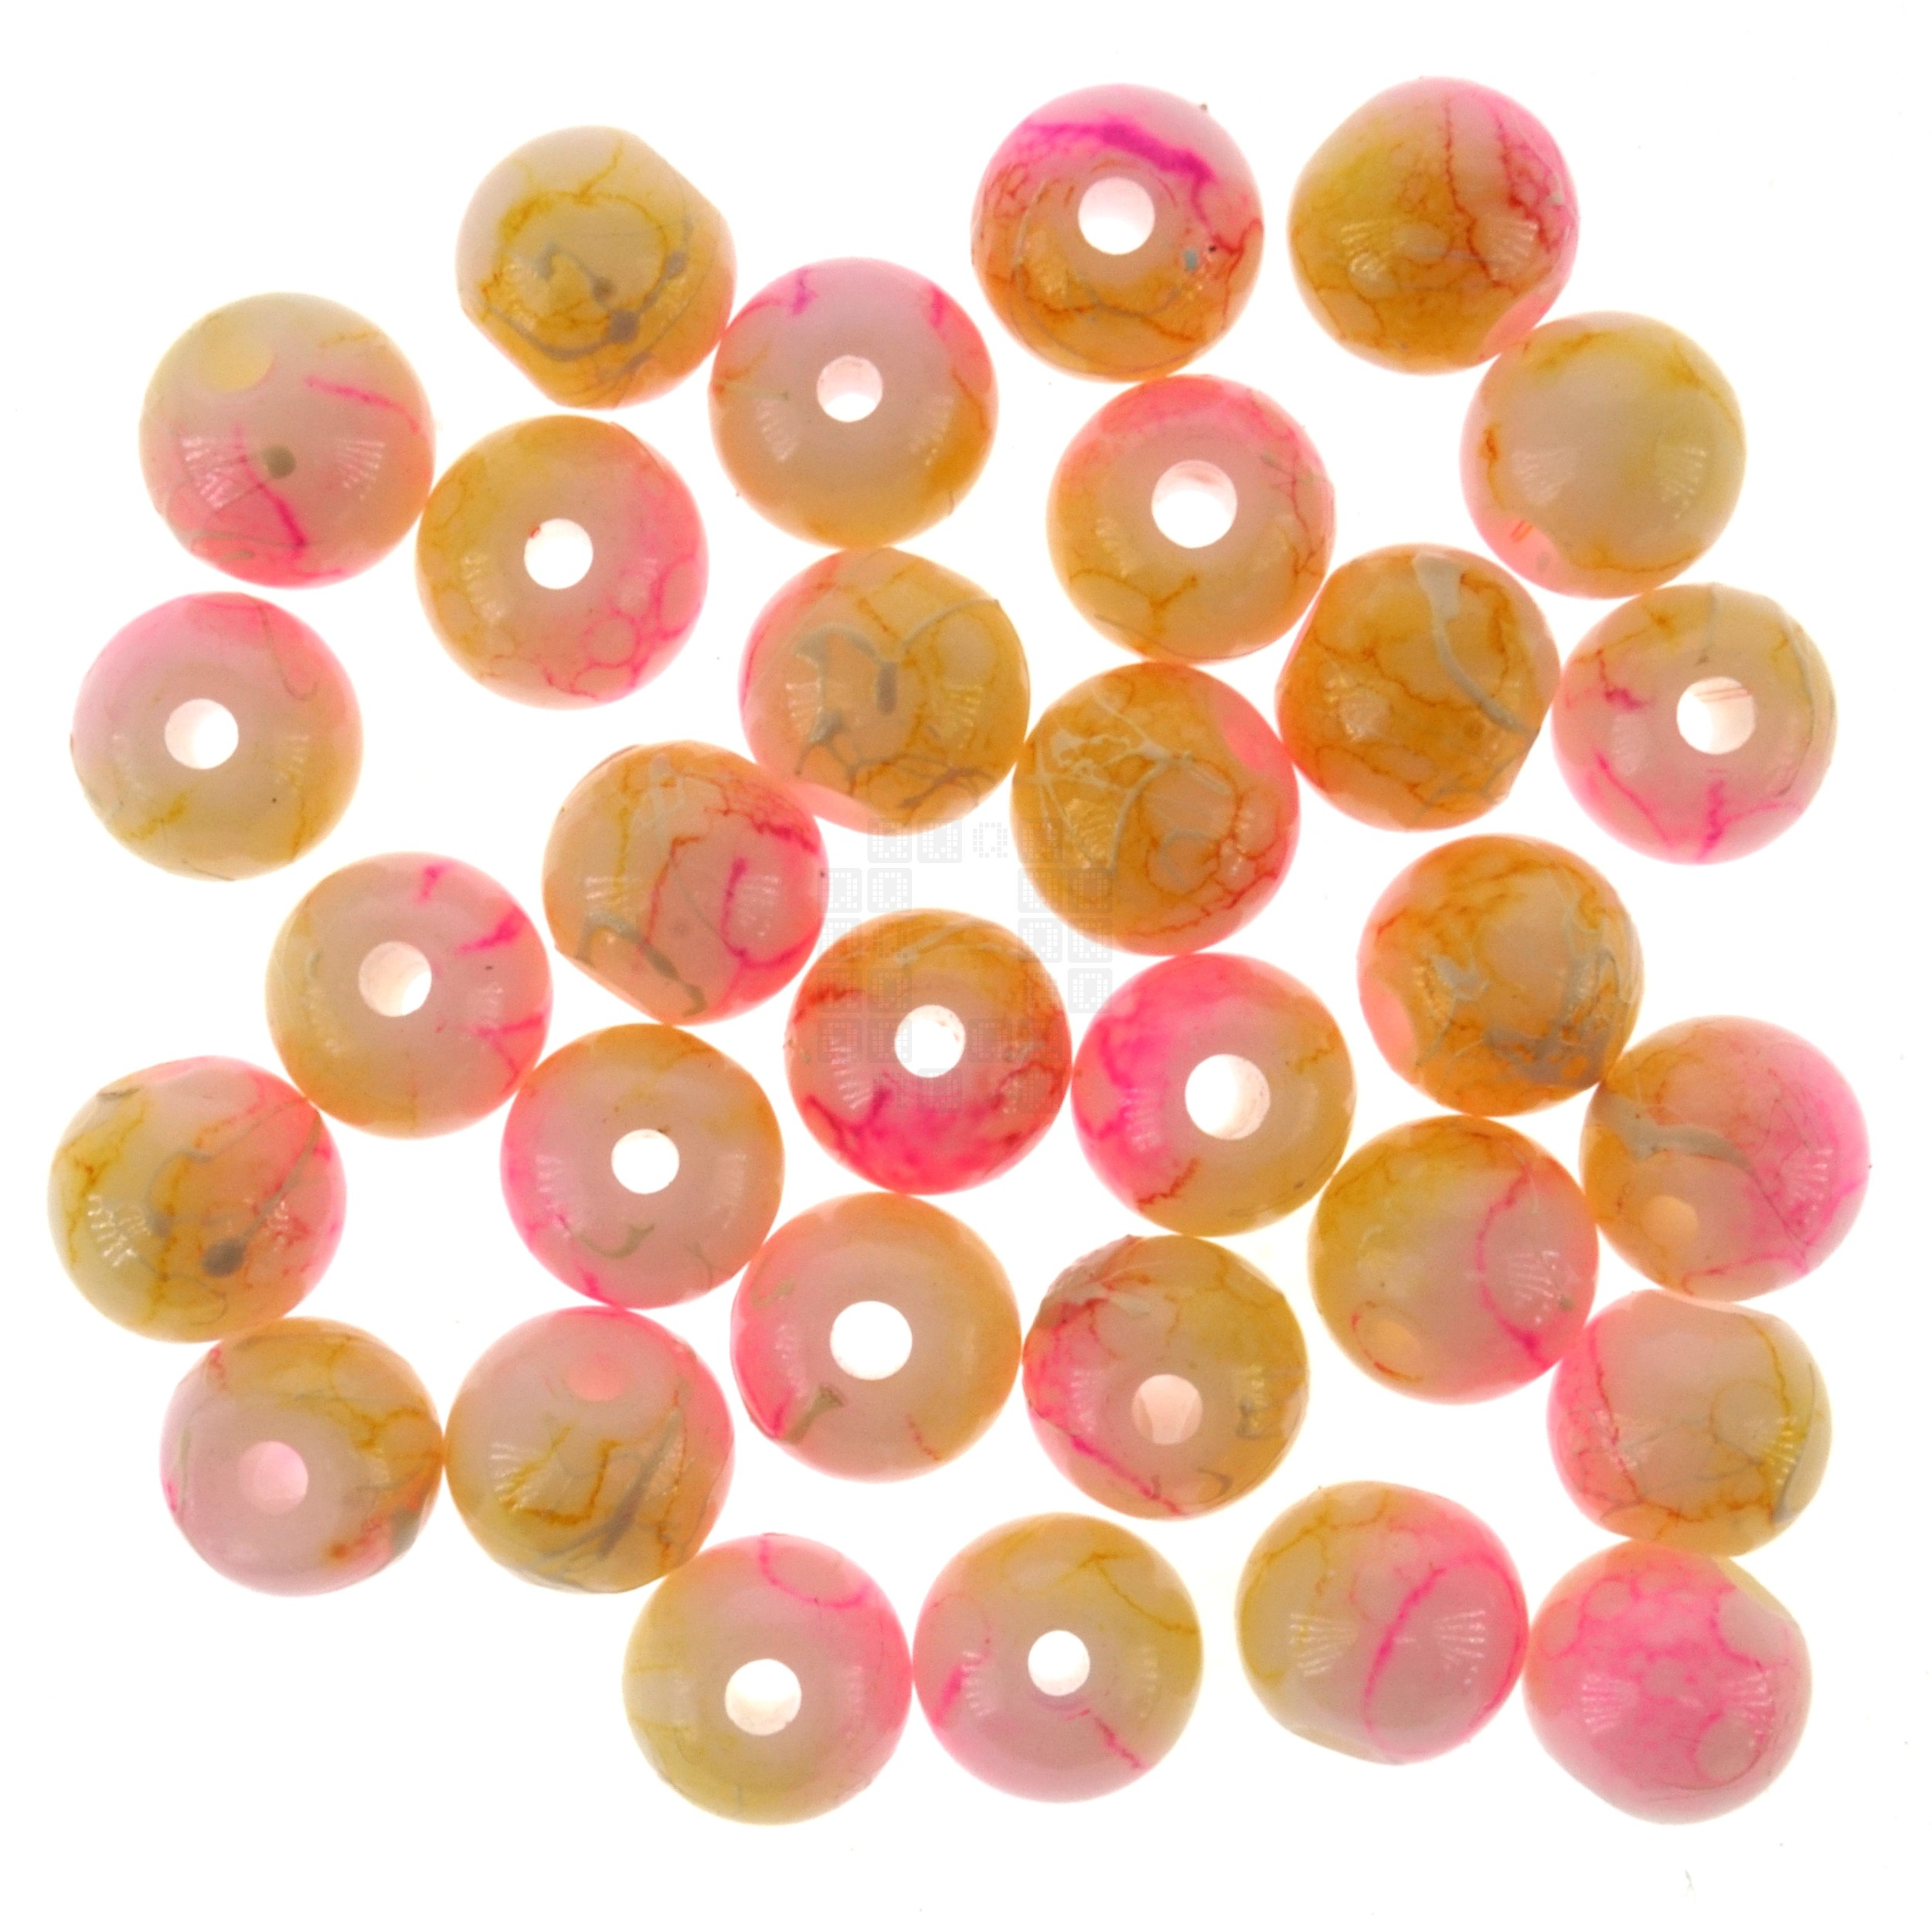 Strawberry Lemonade 8mm Loose Glass Beads, 30 Pieces